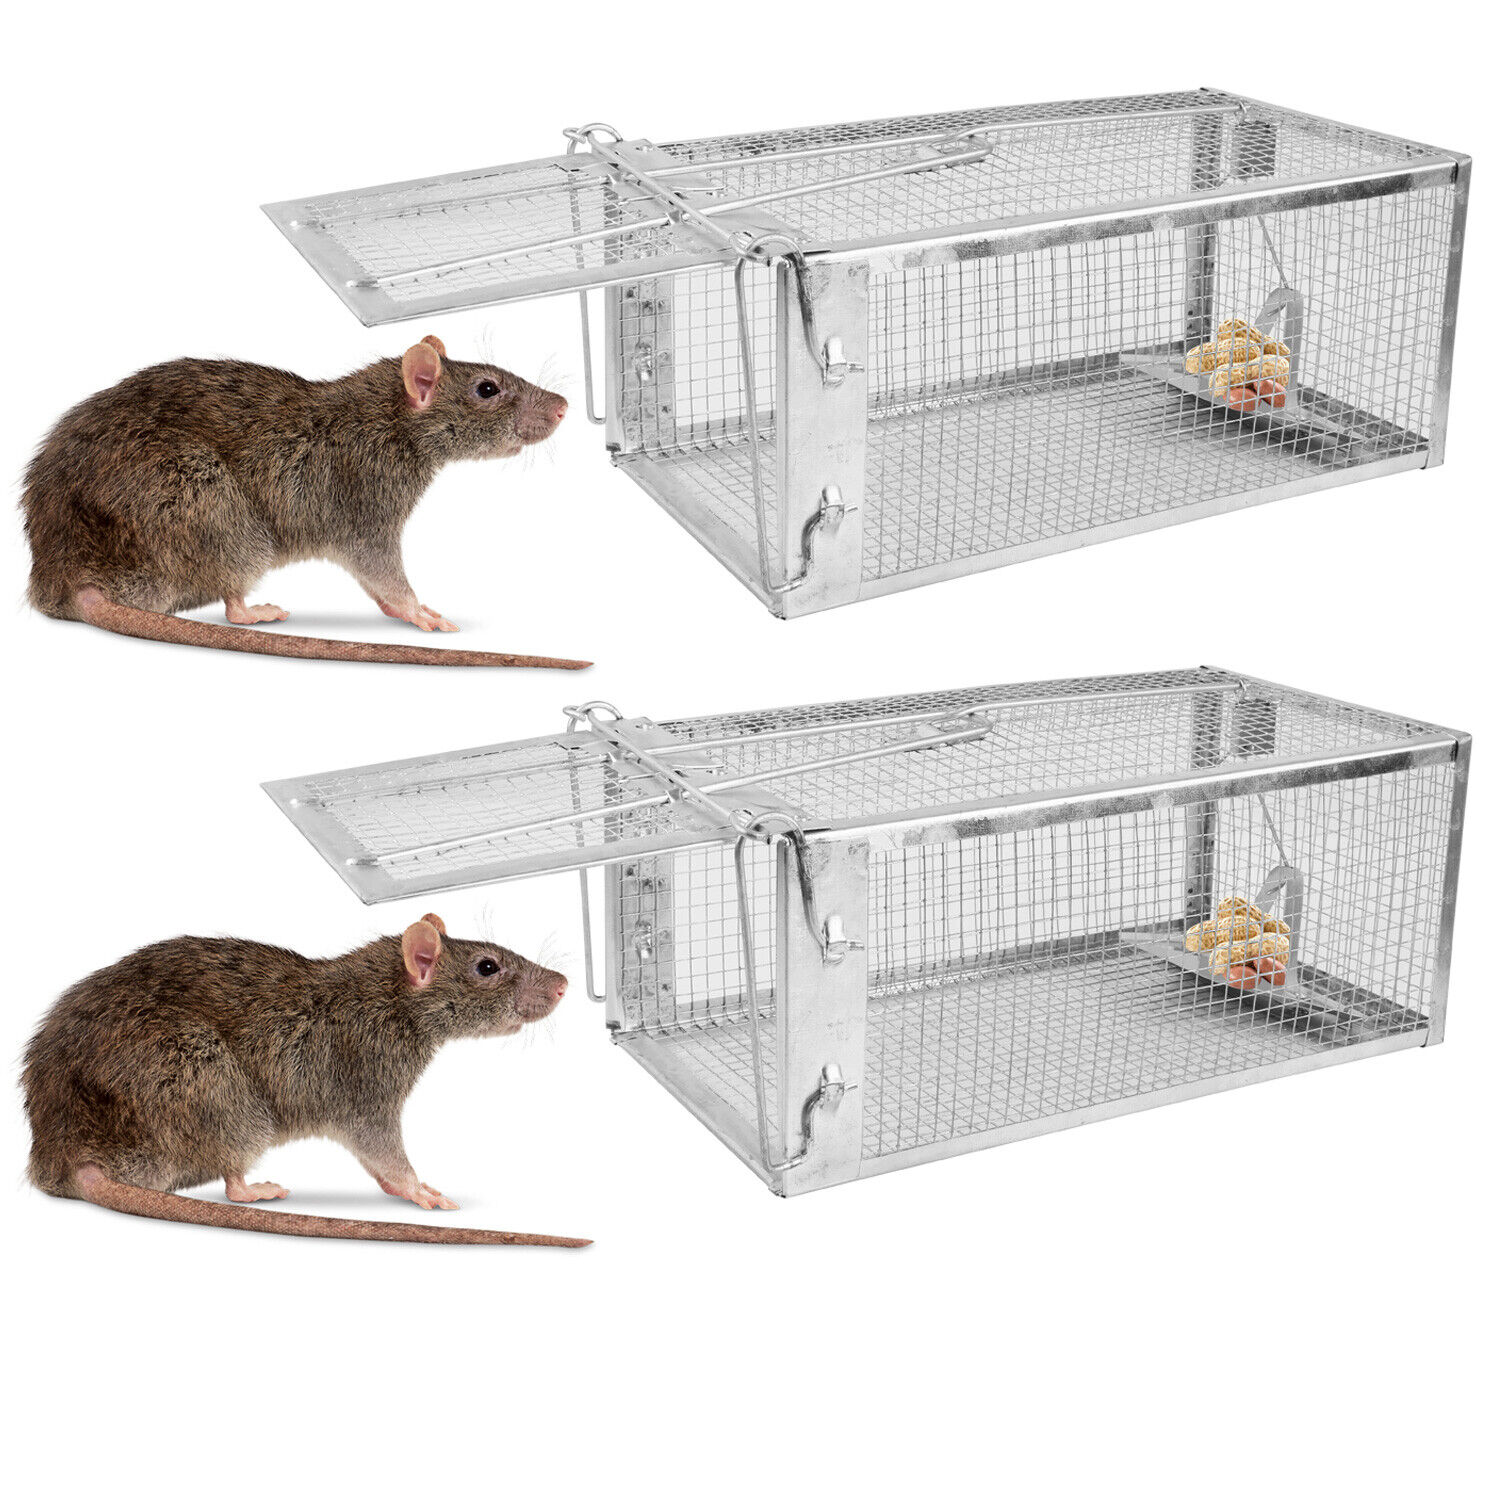 2 Packs Animal Live Rat Trap Cage for Squirrel Chipmunk Control 10.6"x5.5"x4.3" iMounTEK